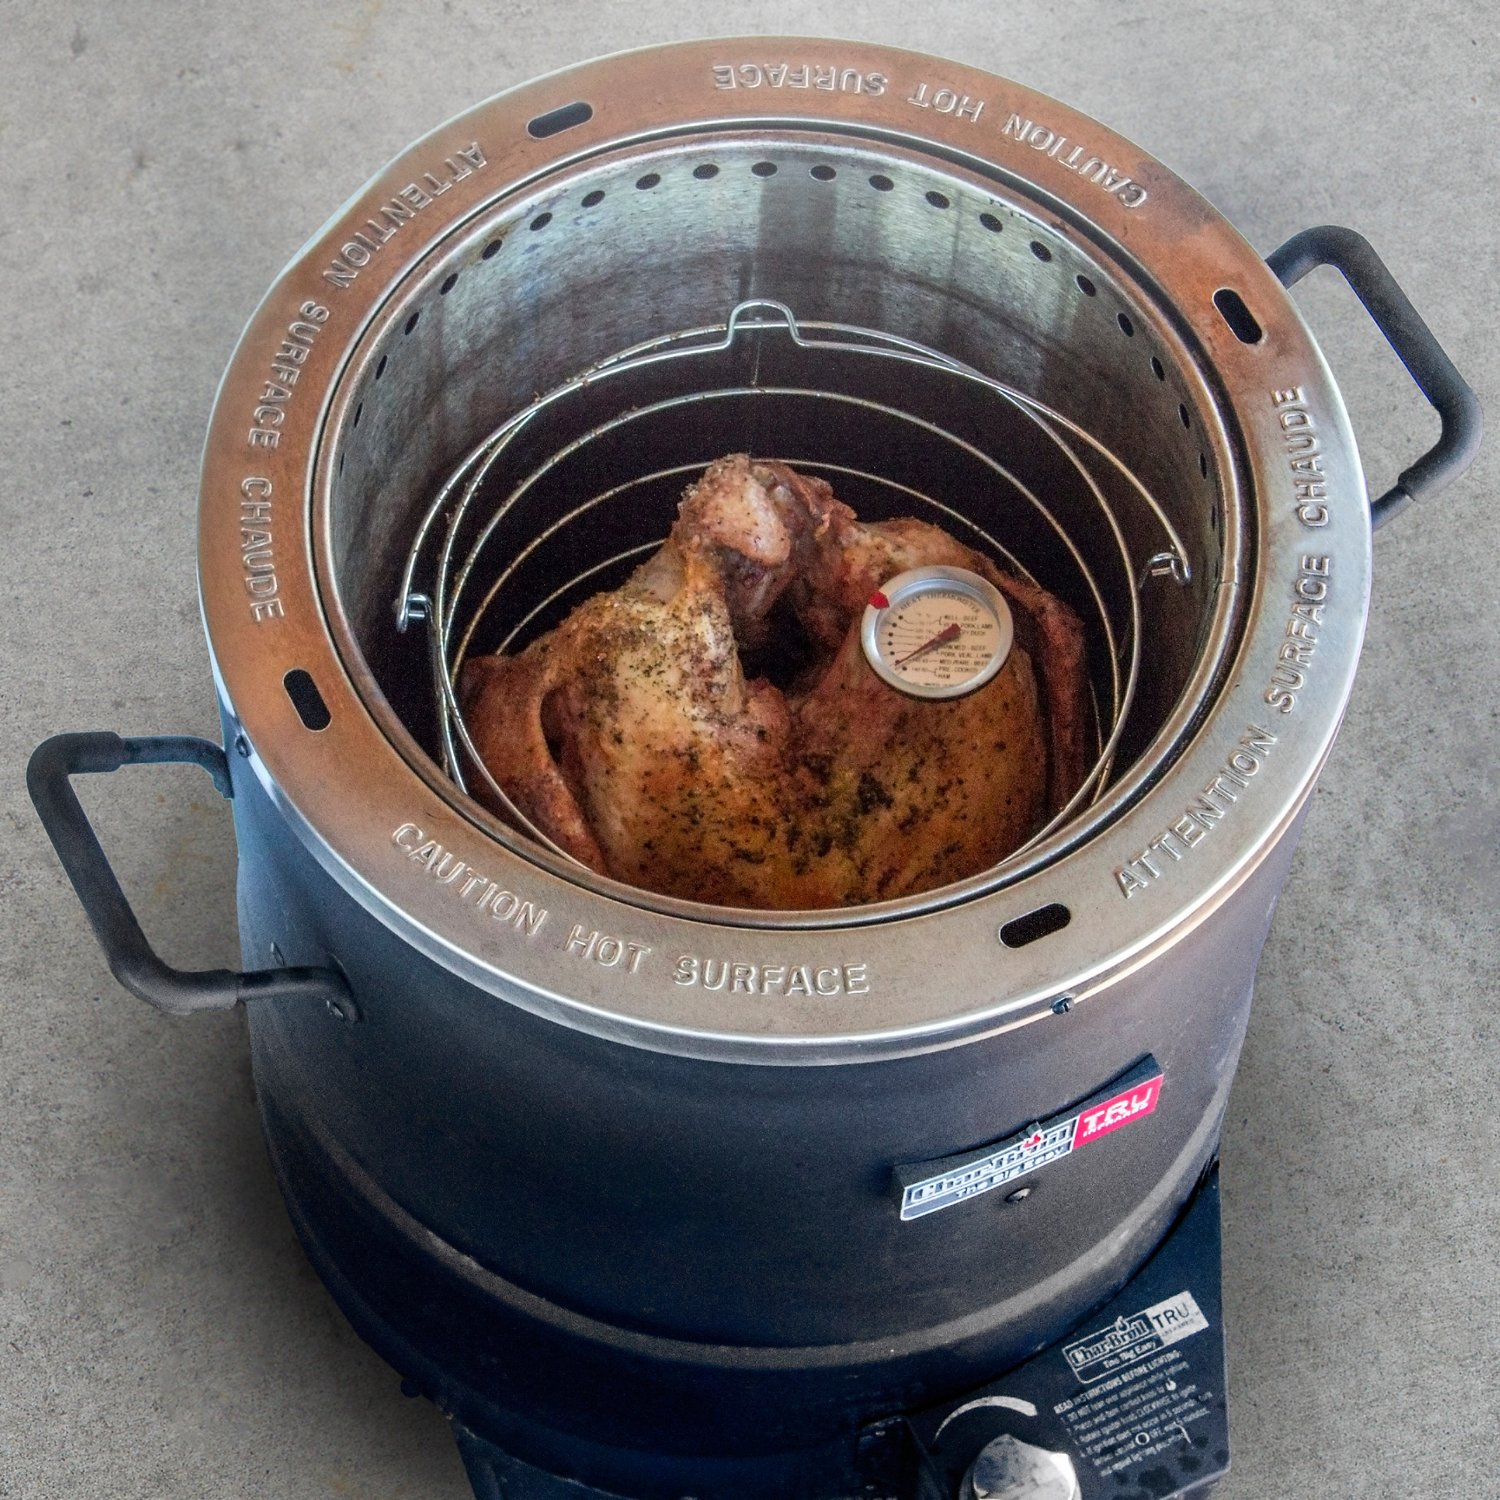 Oil-less Turkey Fryer, The Big Easy®